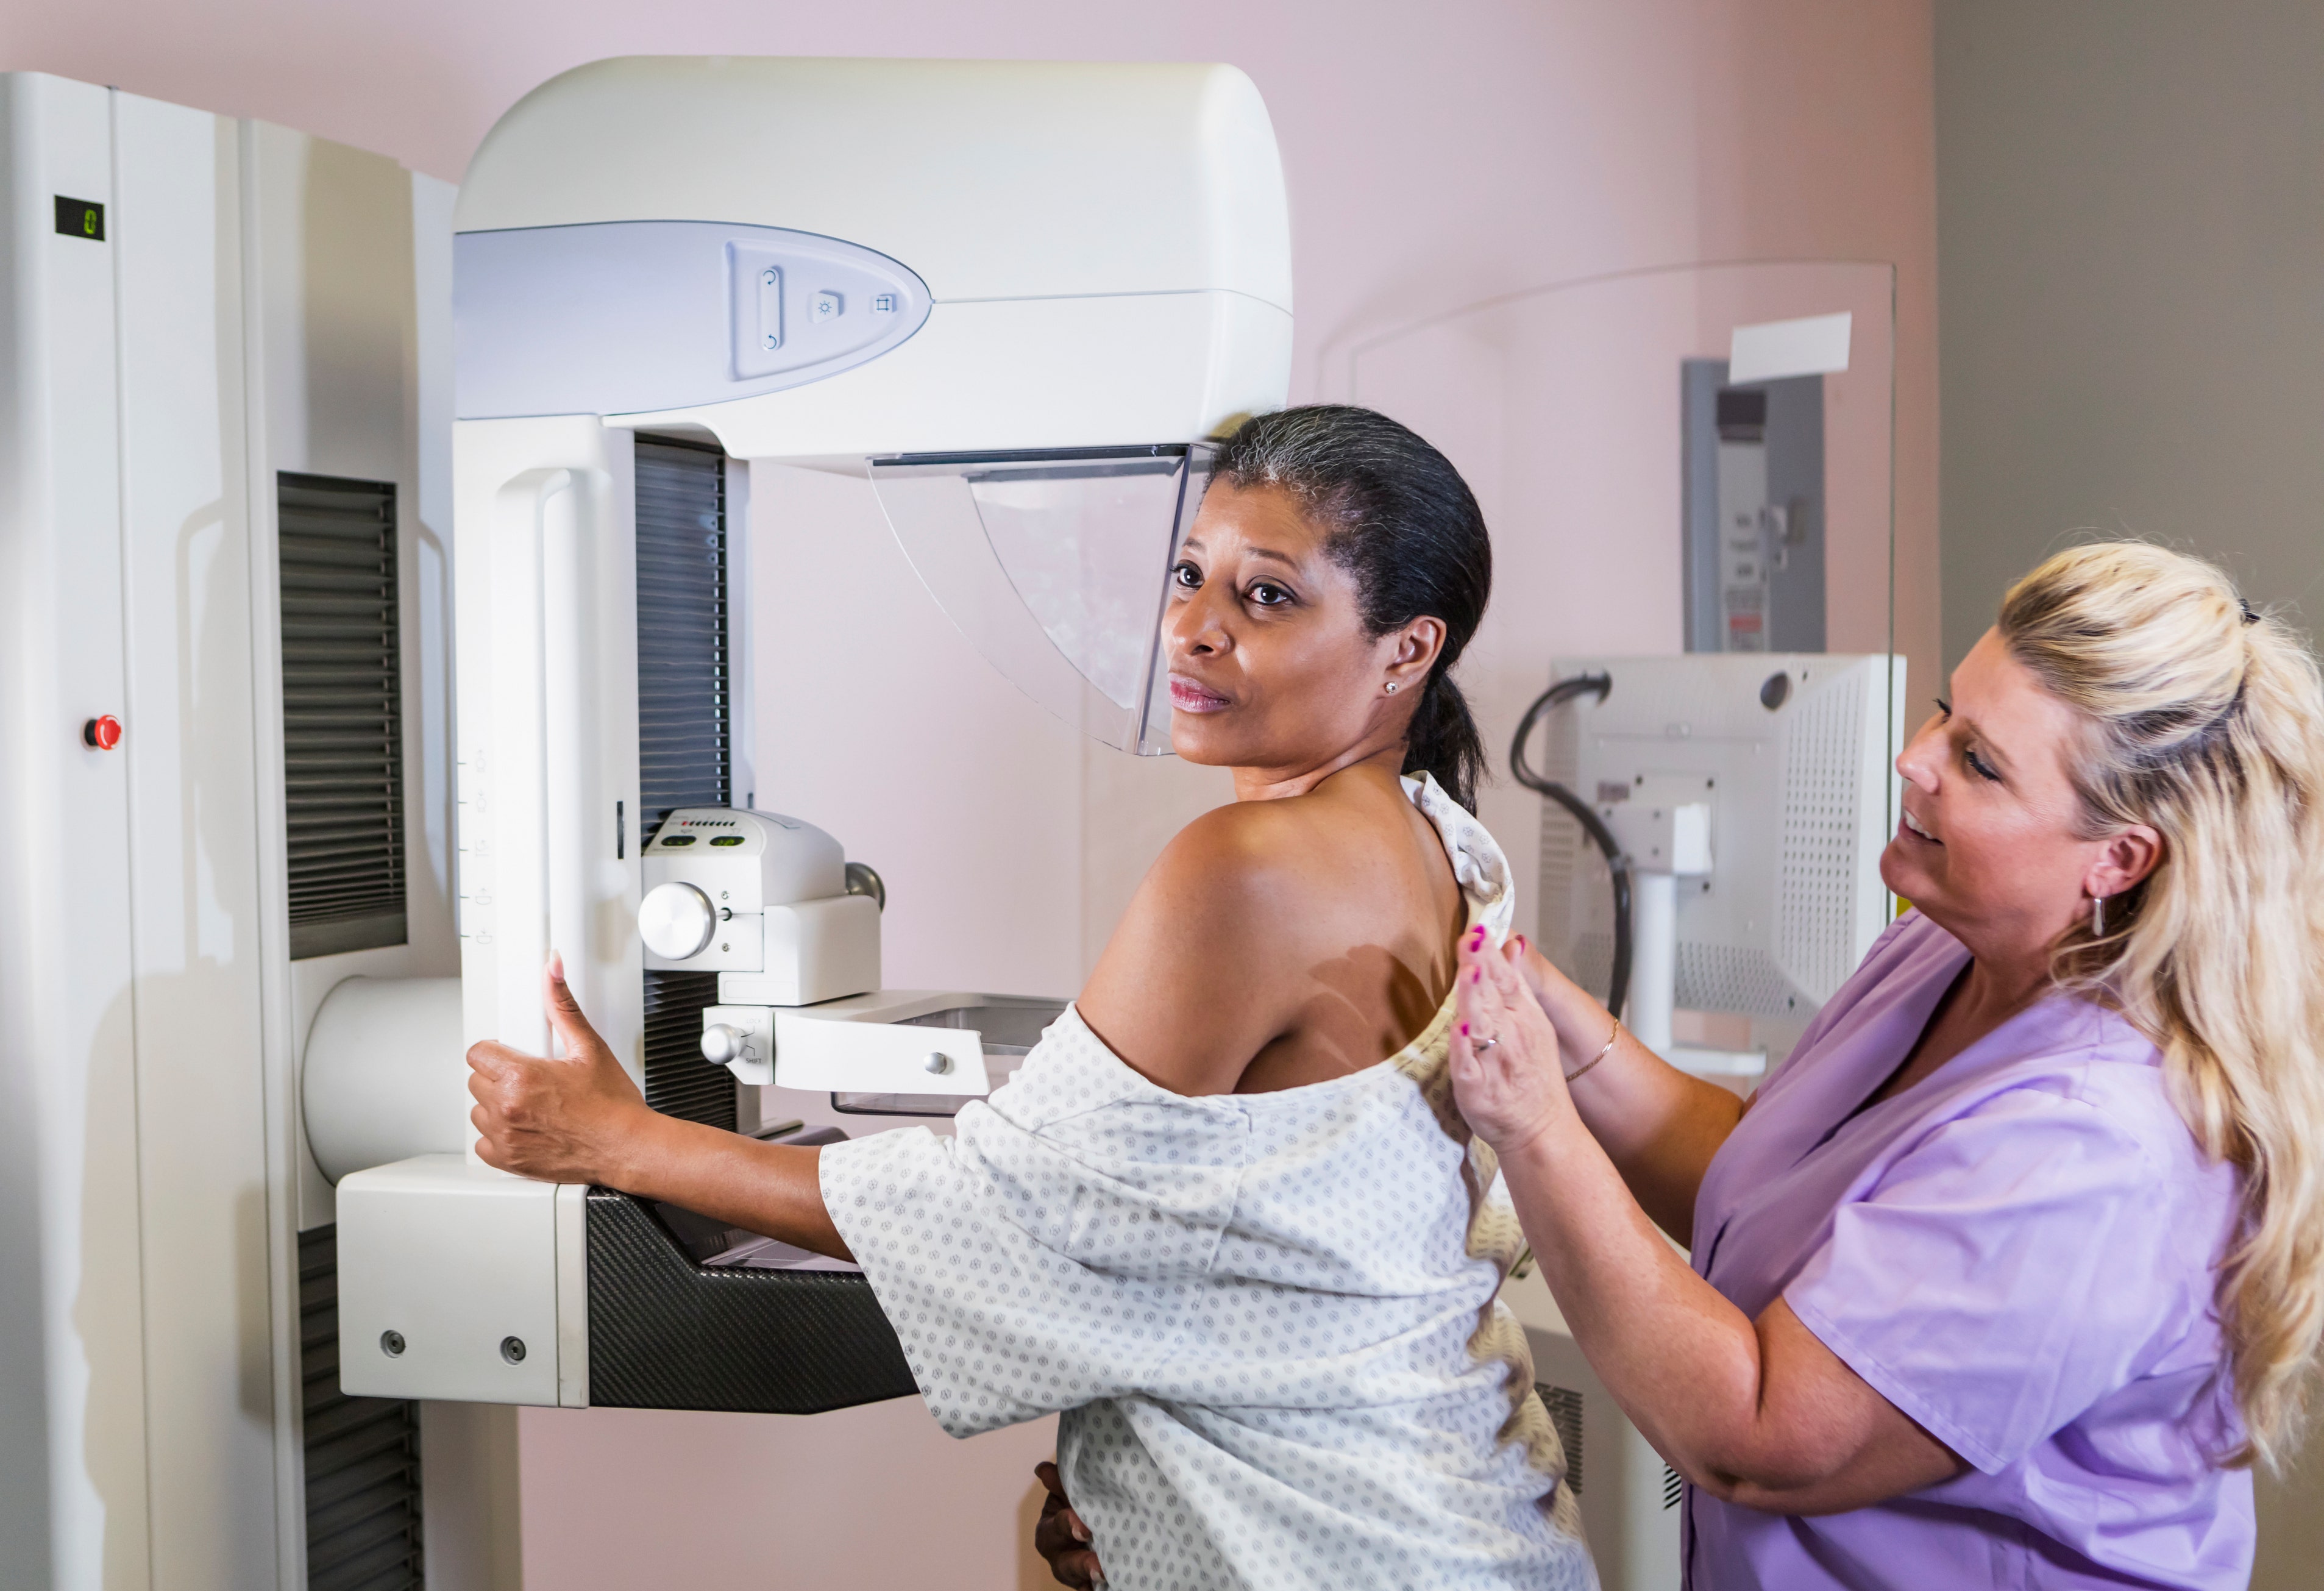 Do not schedule mammogram near COVID-19 vaccine, doctors warn